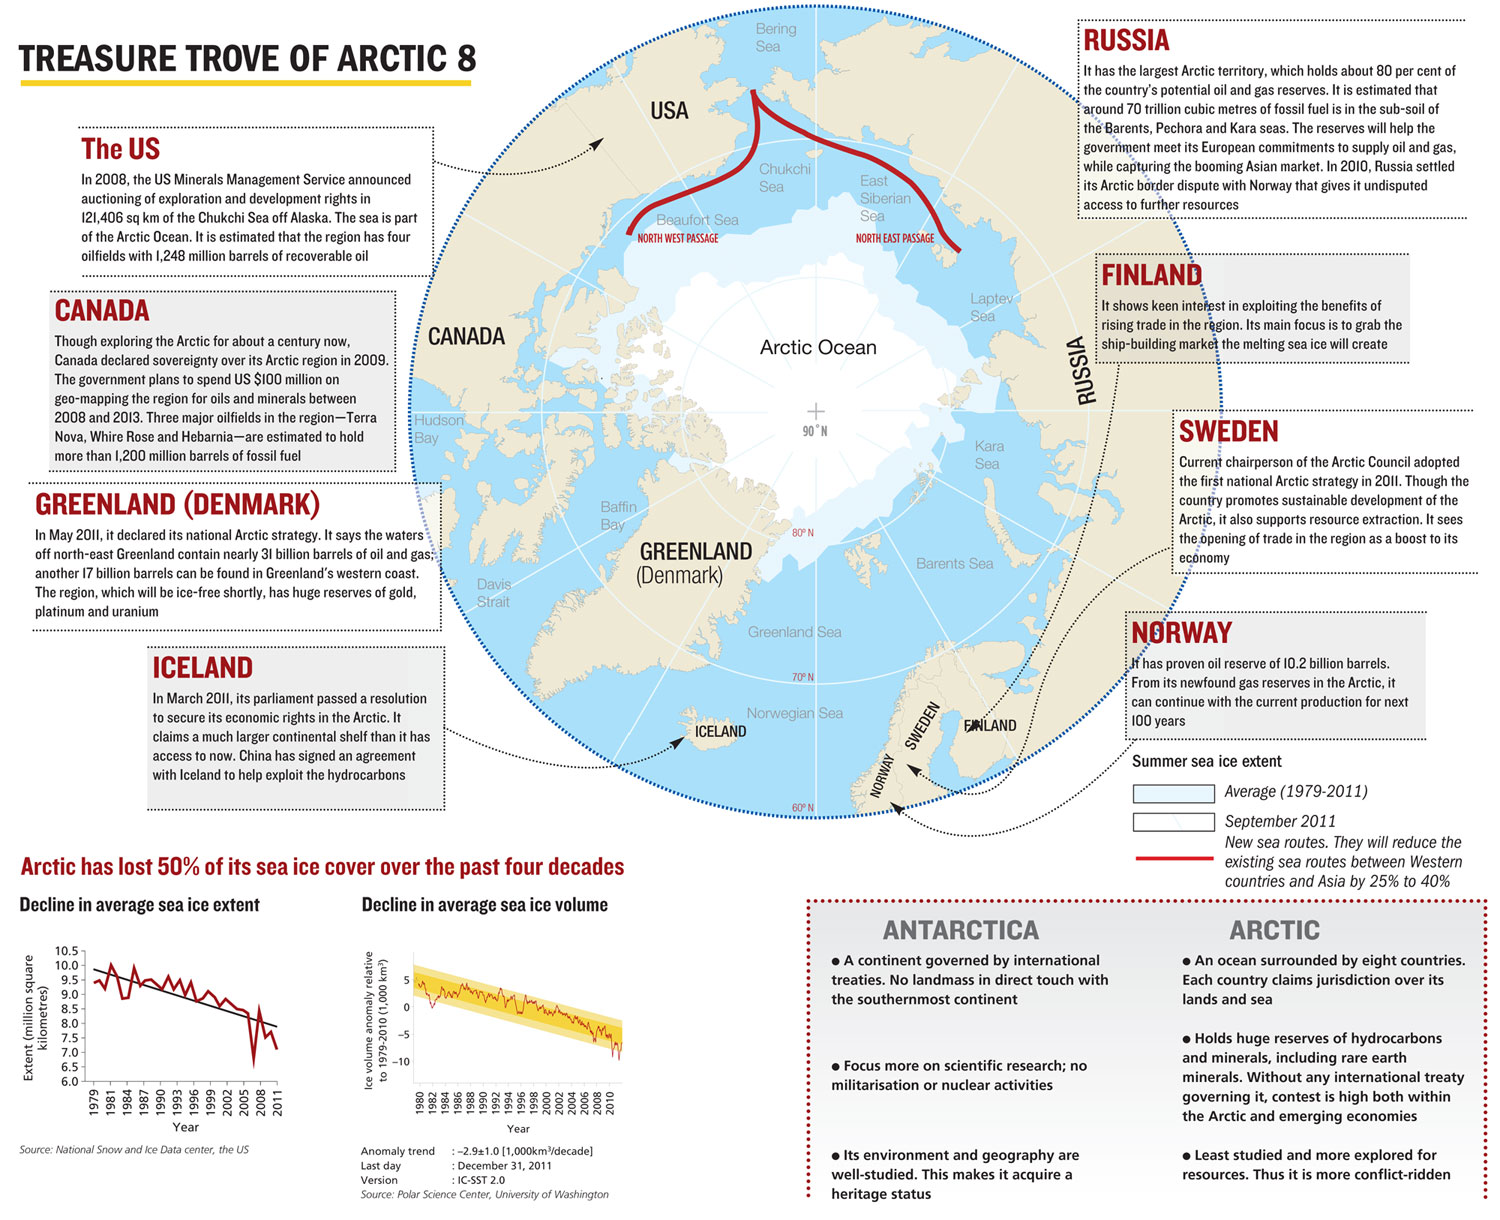 Treasure trove of arctic resources